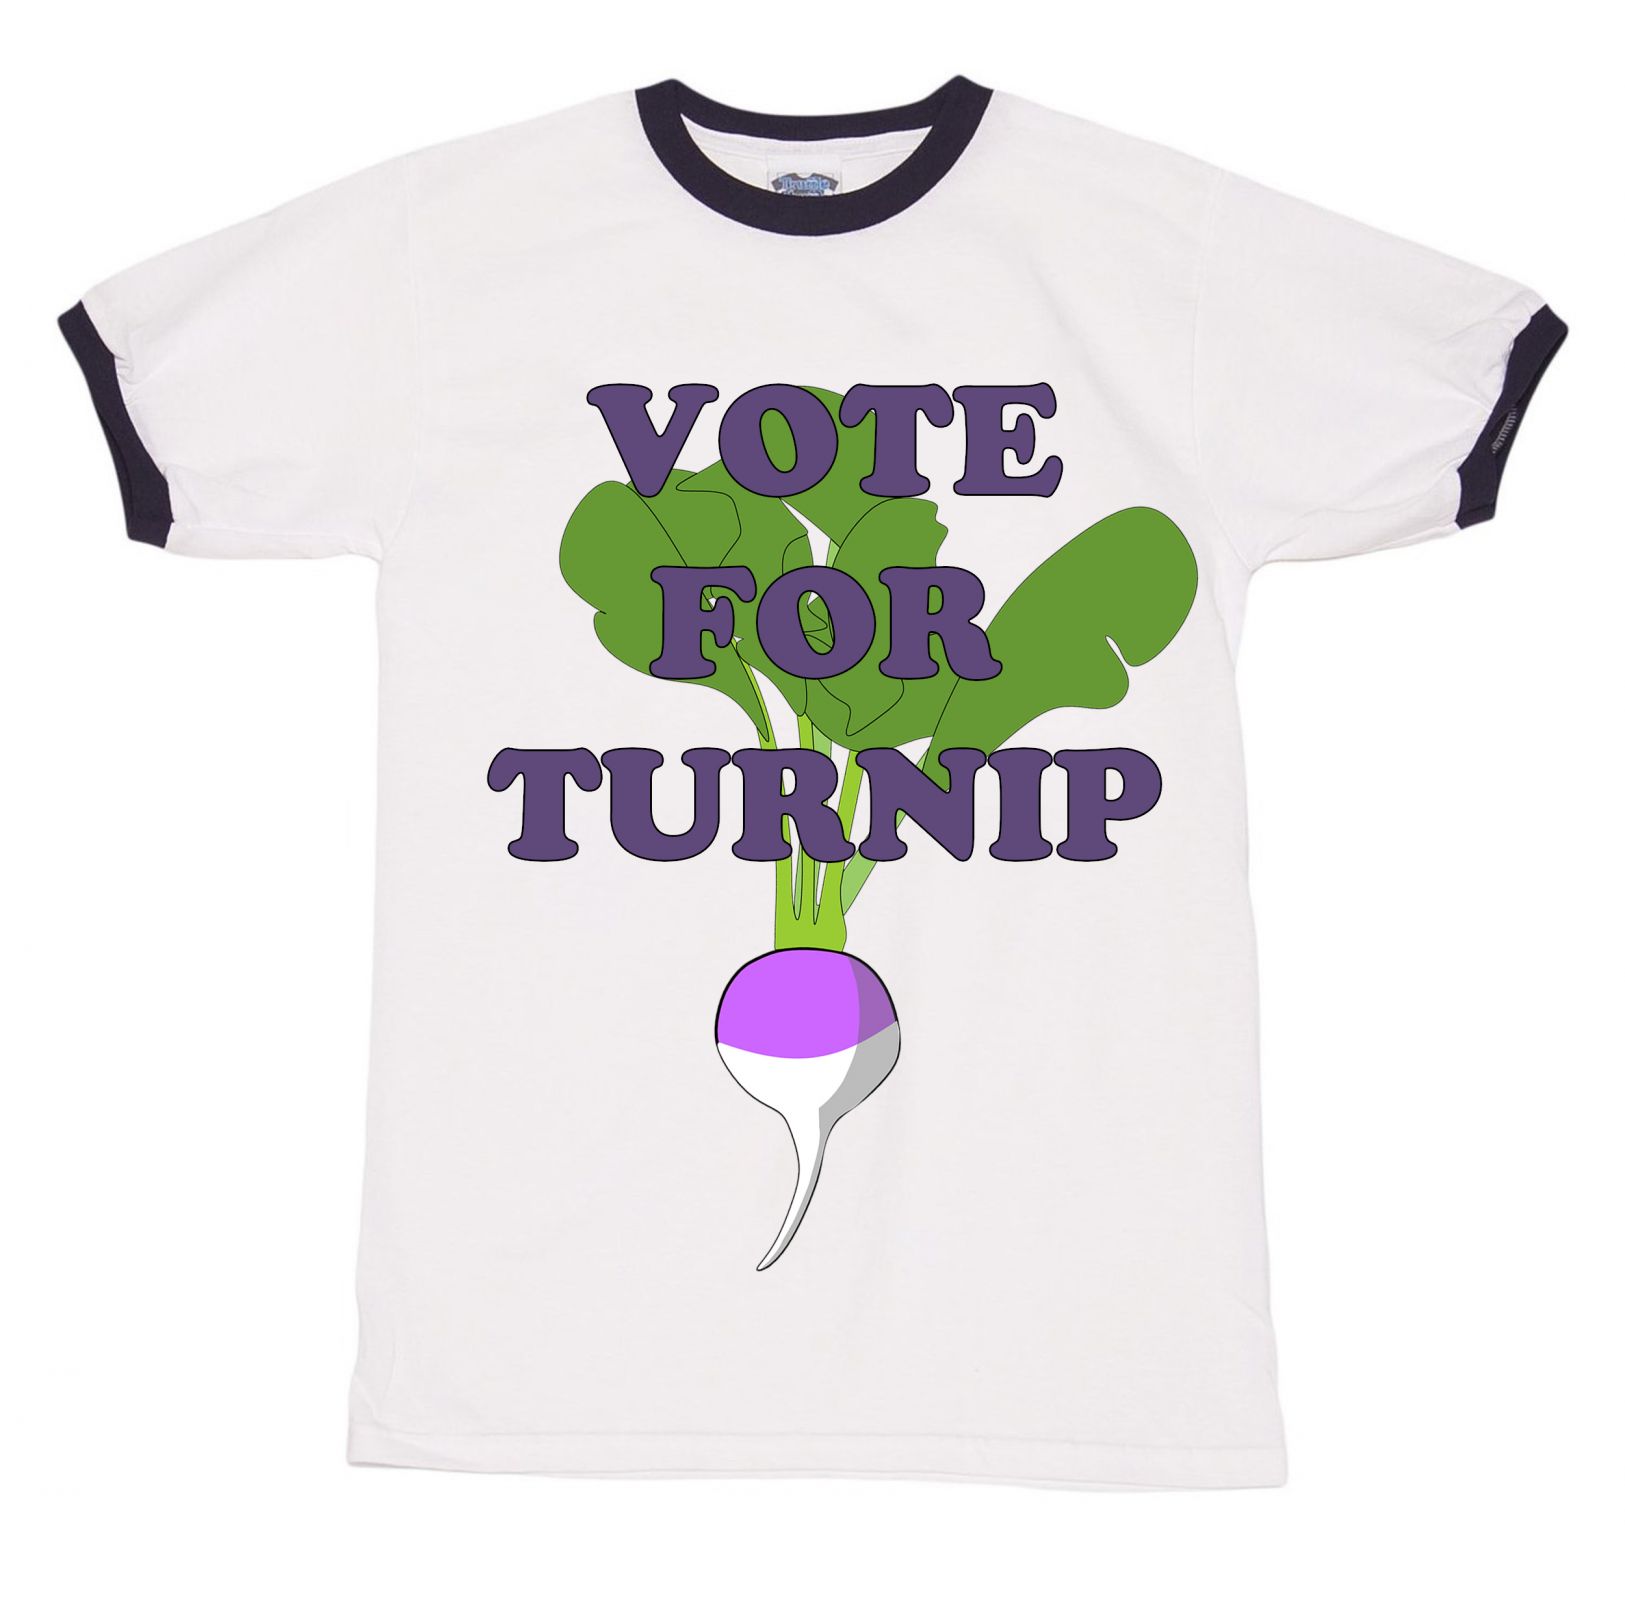 Turnip Shirt Ideas